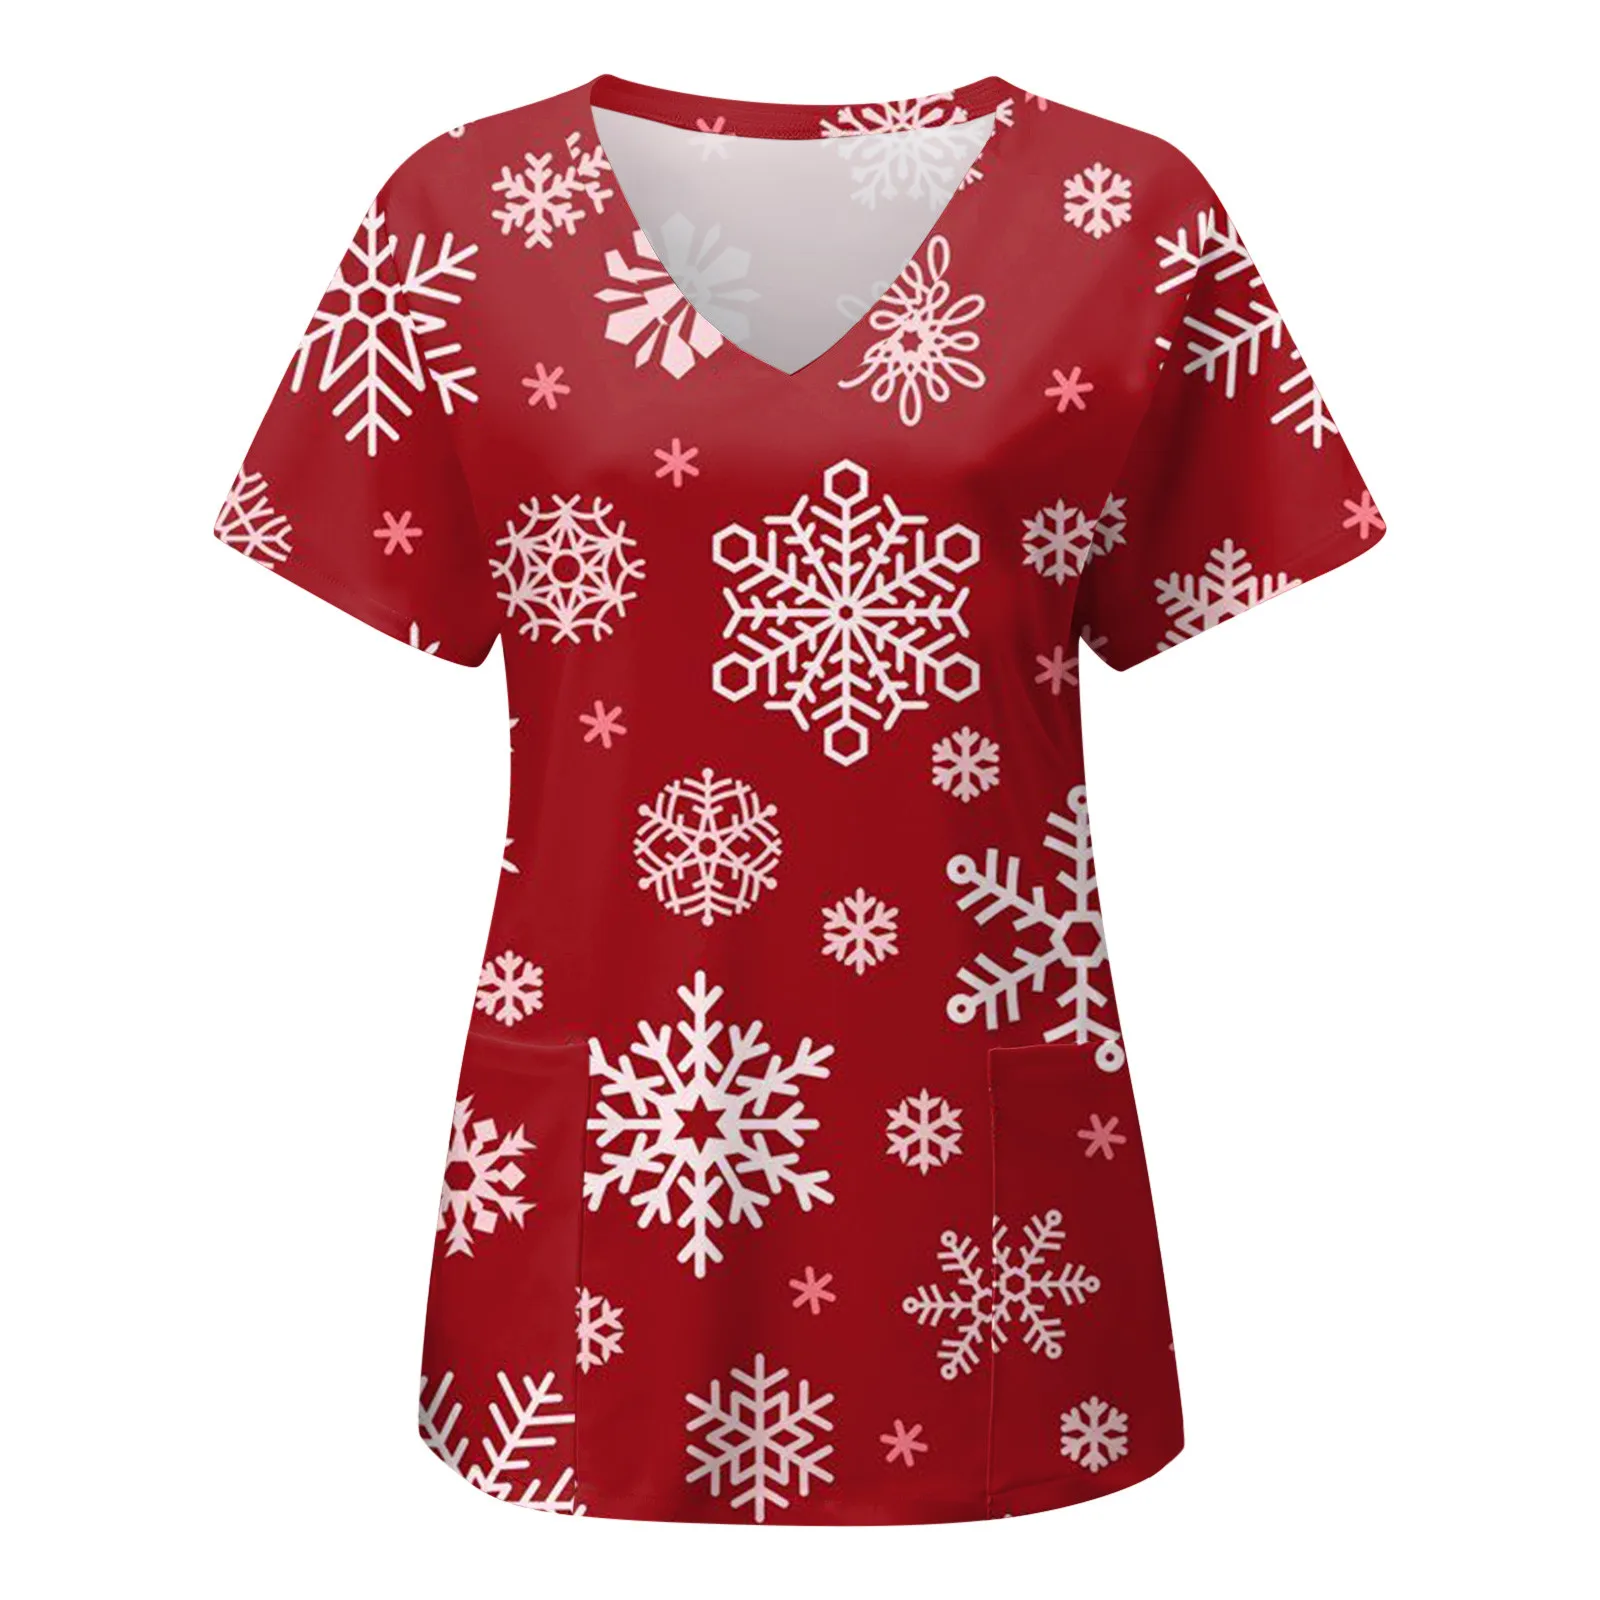 

Christmas Nurse Uniform Women Xmas Snowflake Print Short Sleeve Pockets V Neck Overalls Tops Medical Working Uniforme Healthcare